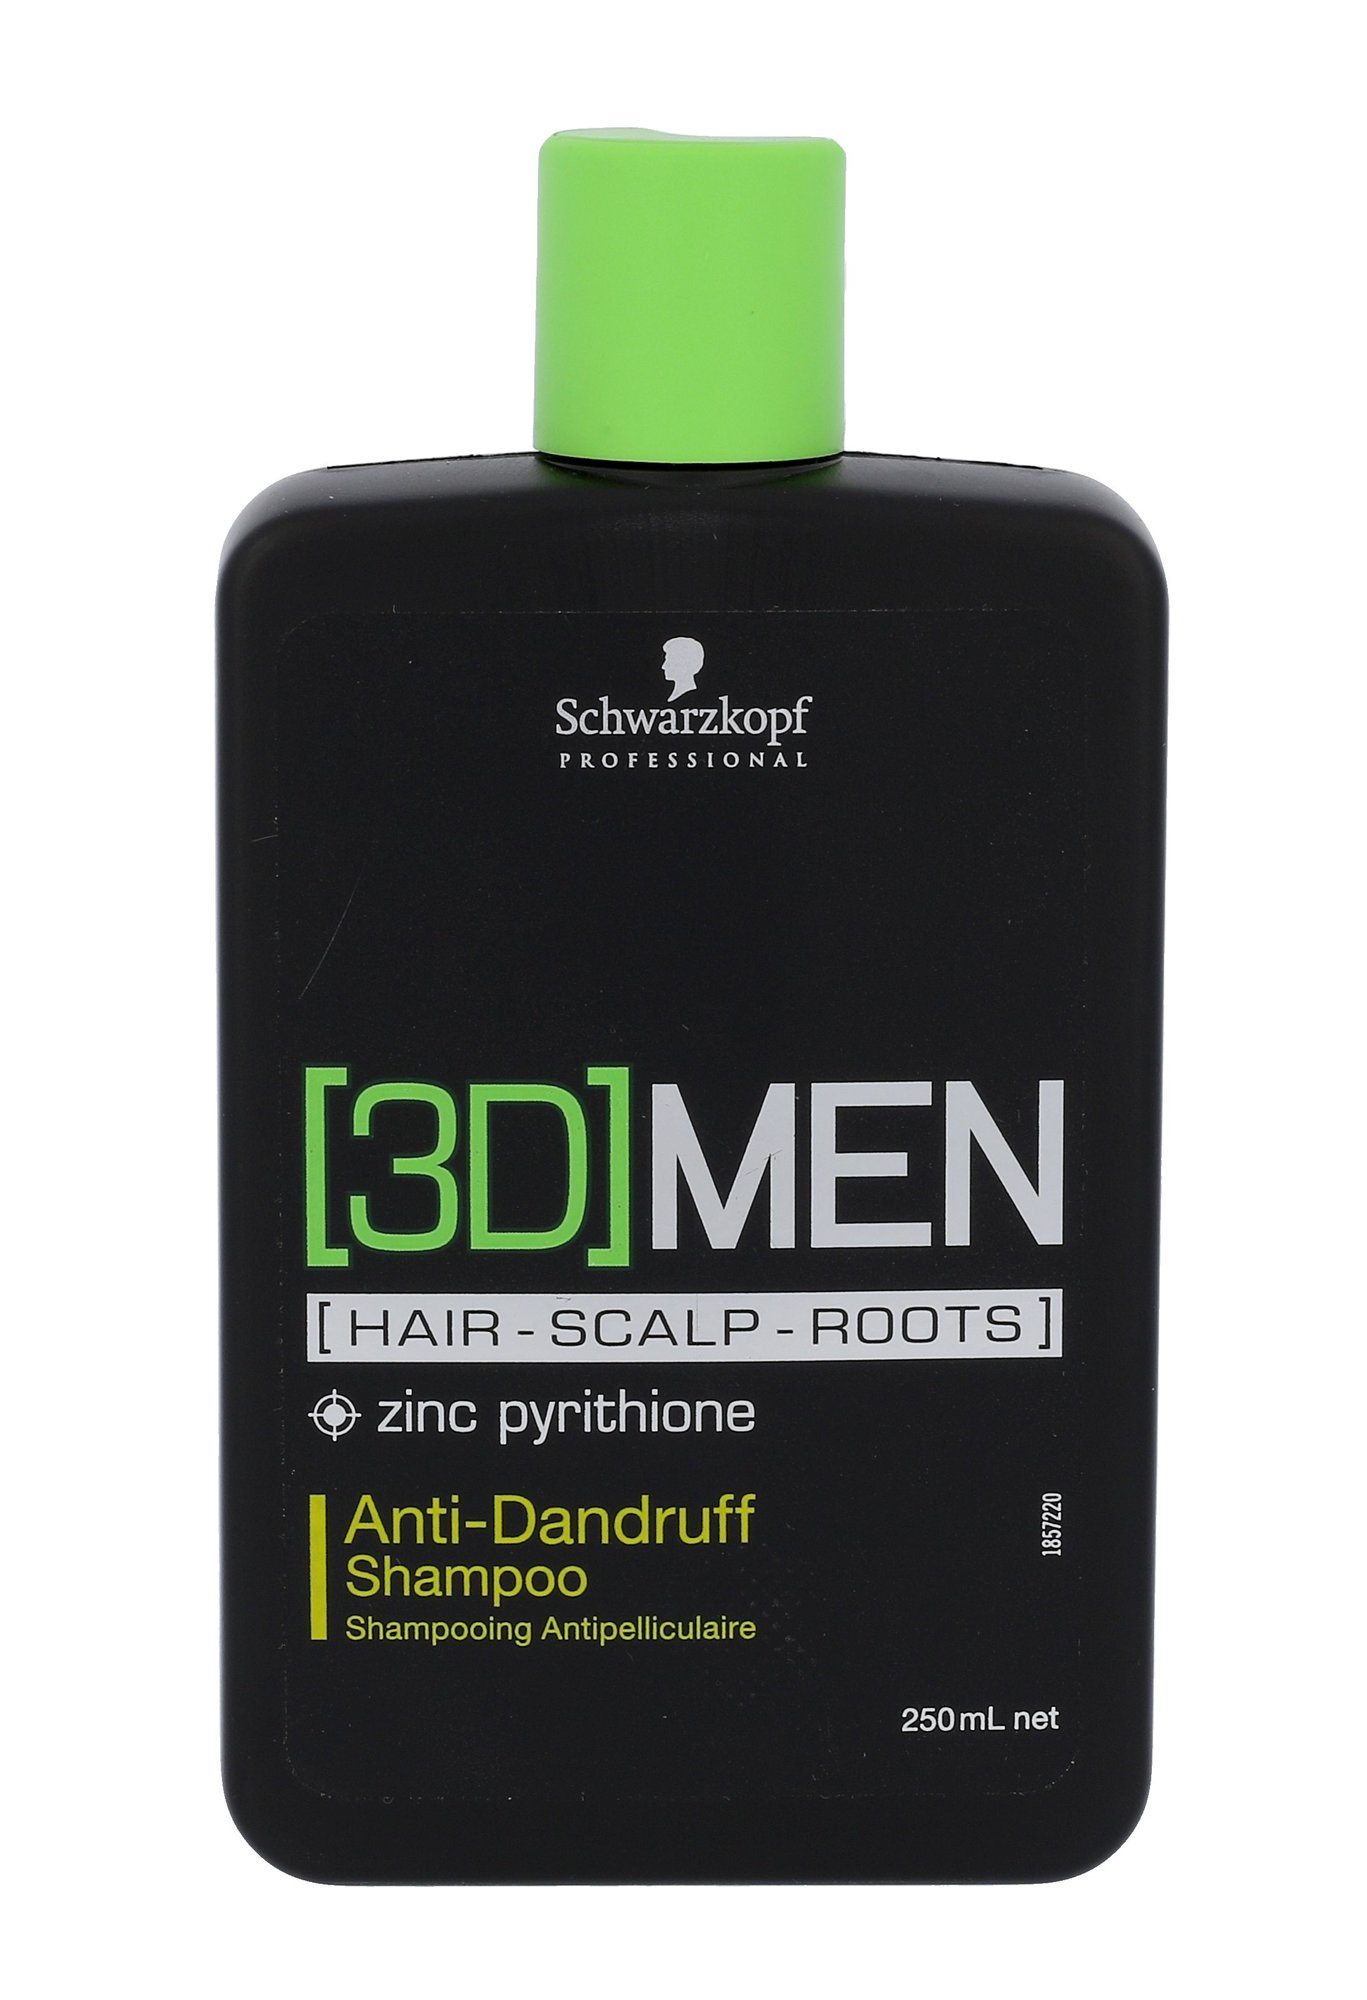 Schwarzkopf 3DMEN Anti Dandruff Shampoo